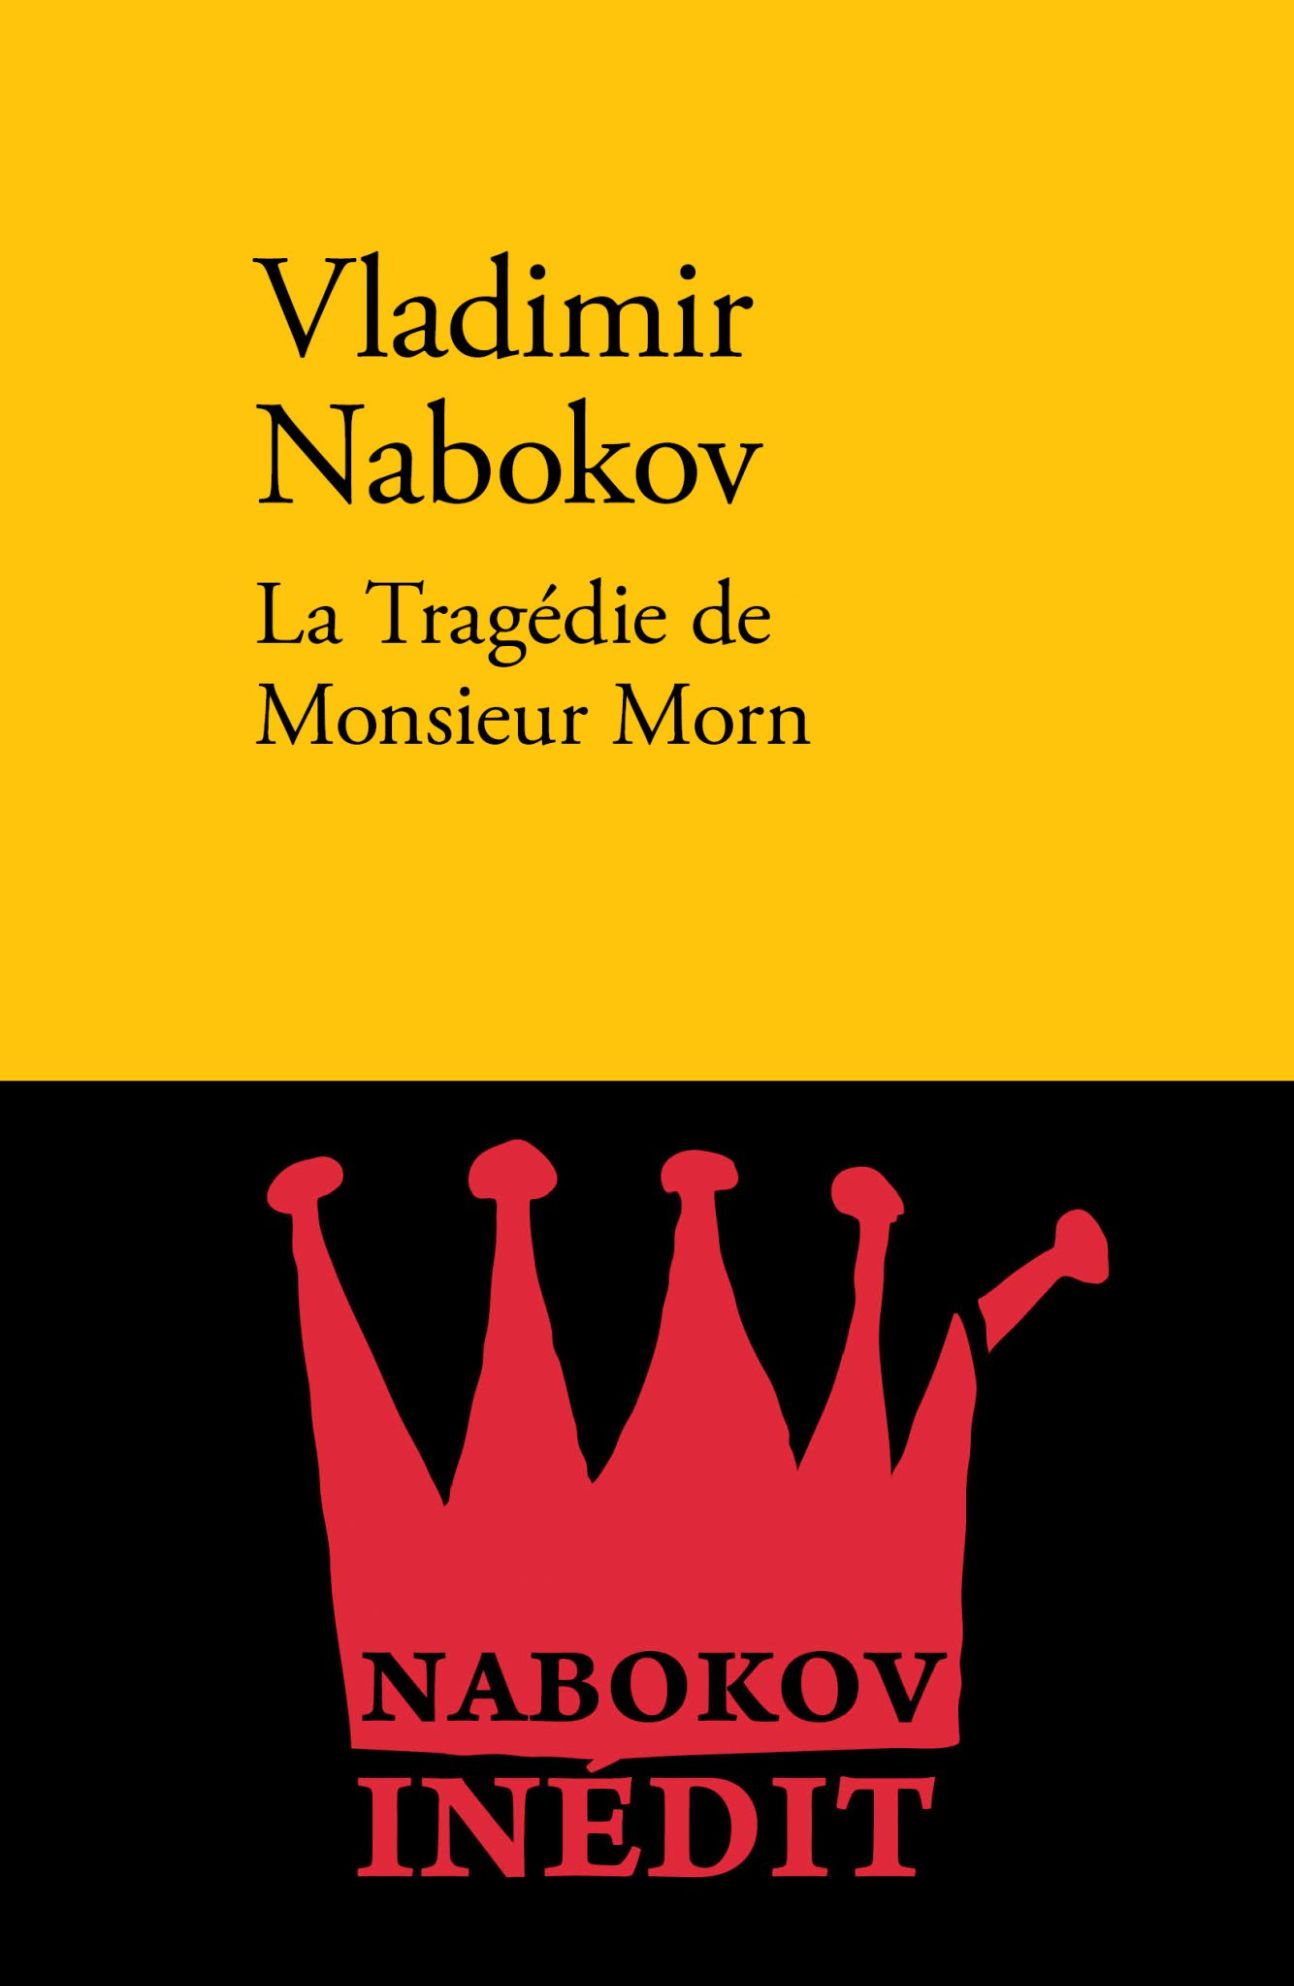 Vladimir Nabokov, La Tragédie de Monsieur Morn